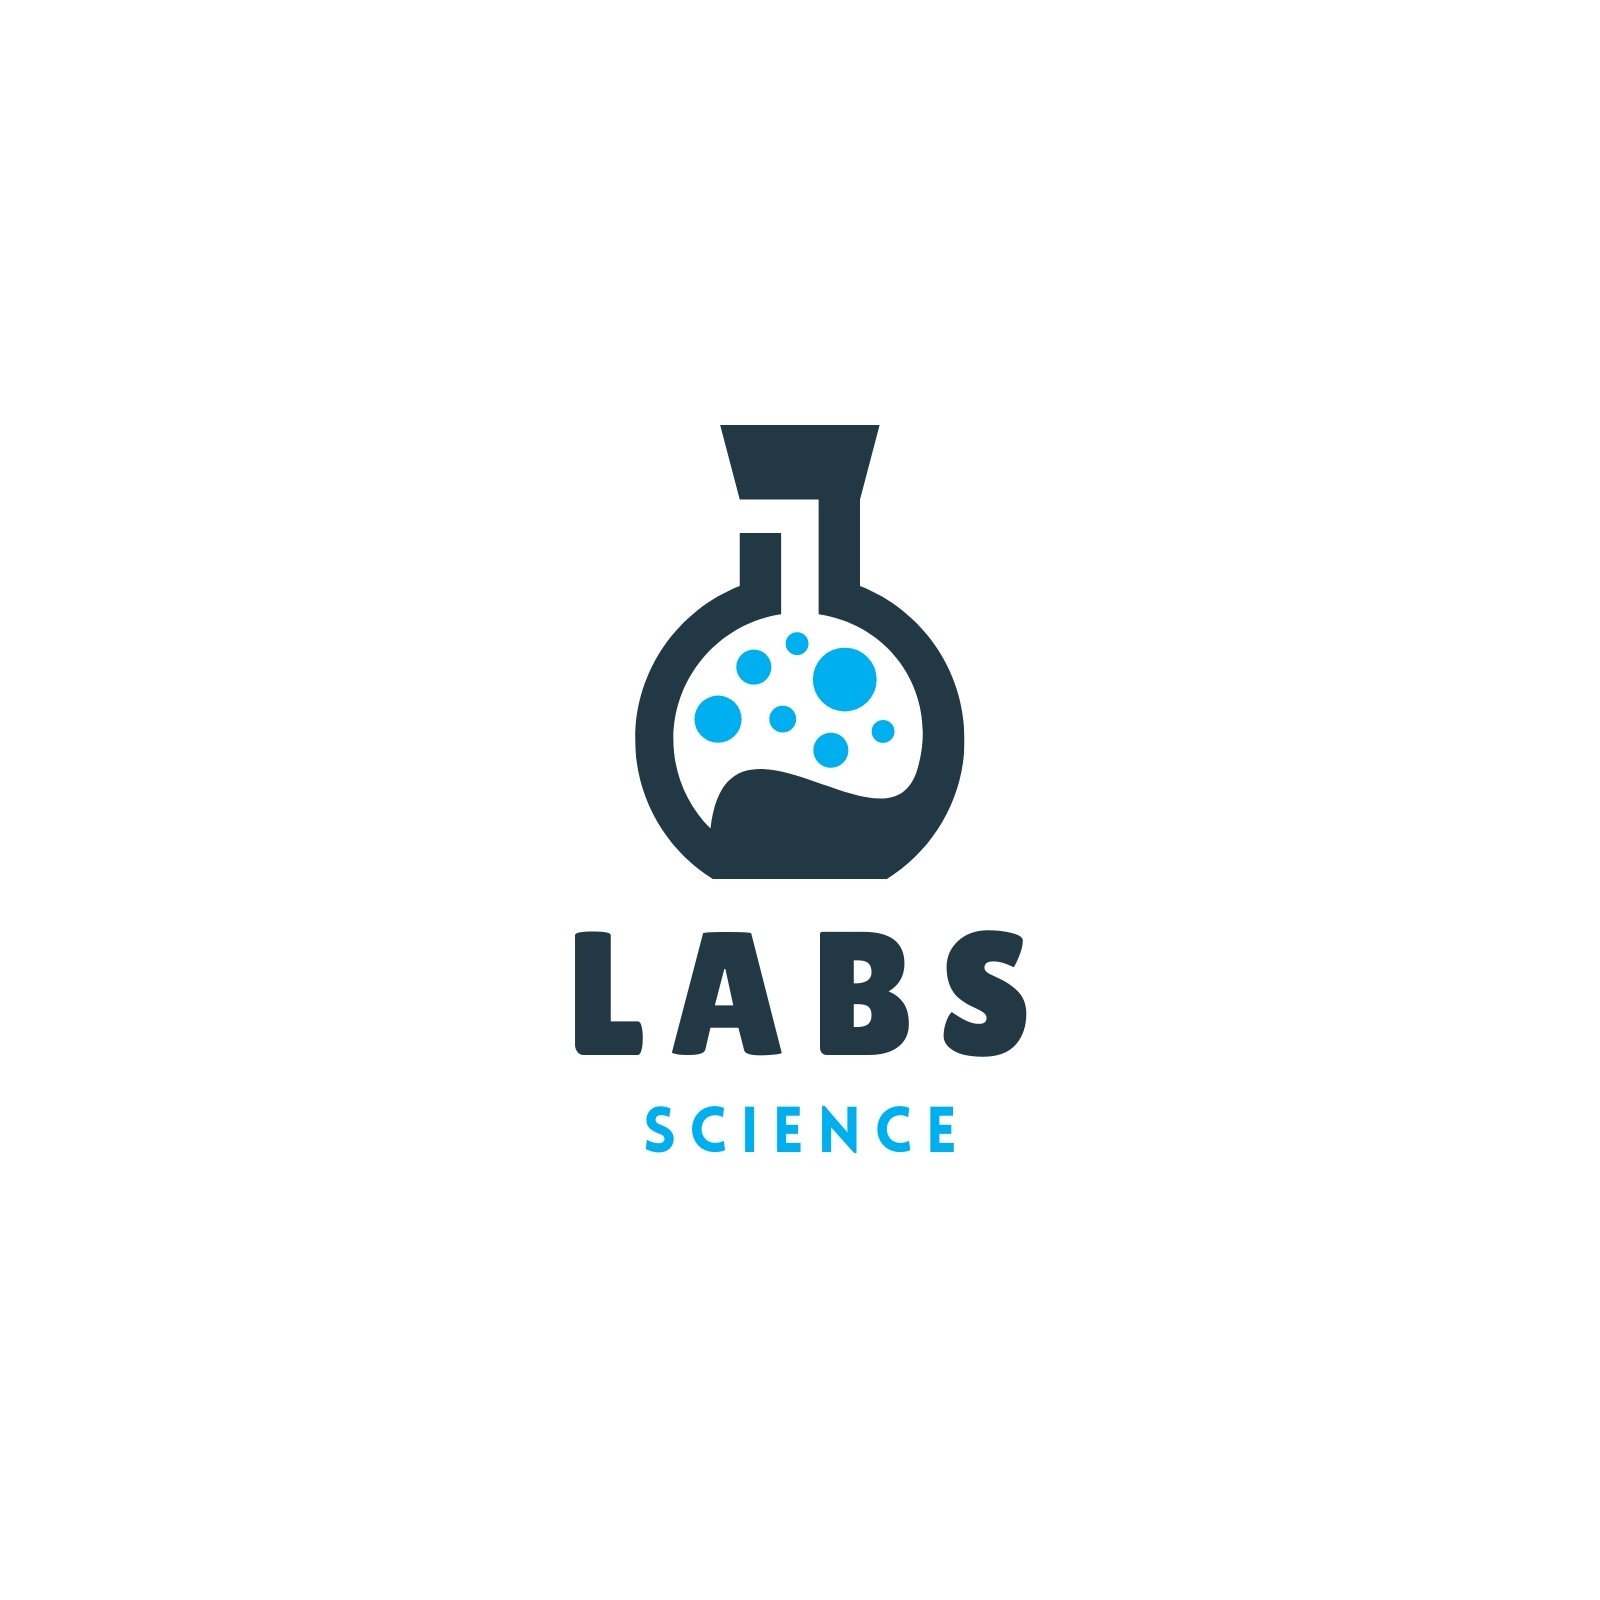 Liquid Science And Research Lab Logo Design Concept 68 - Crella